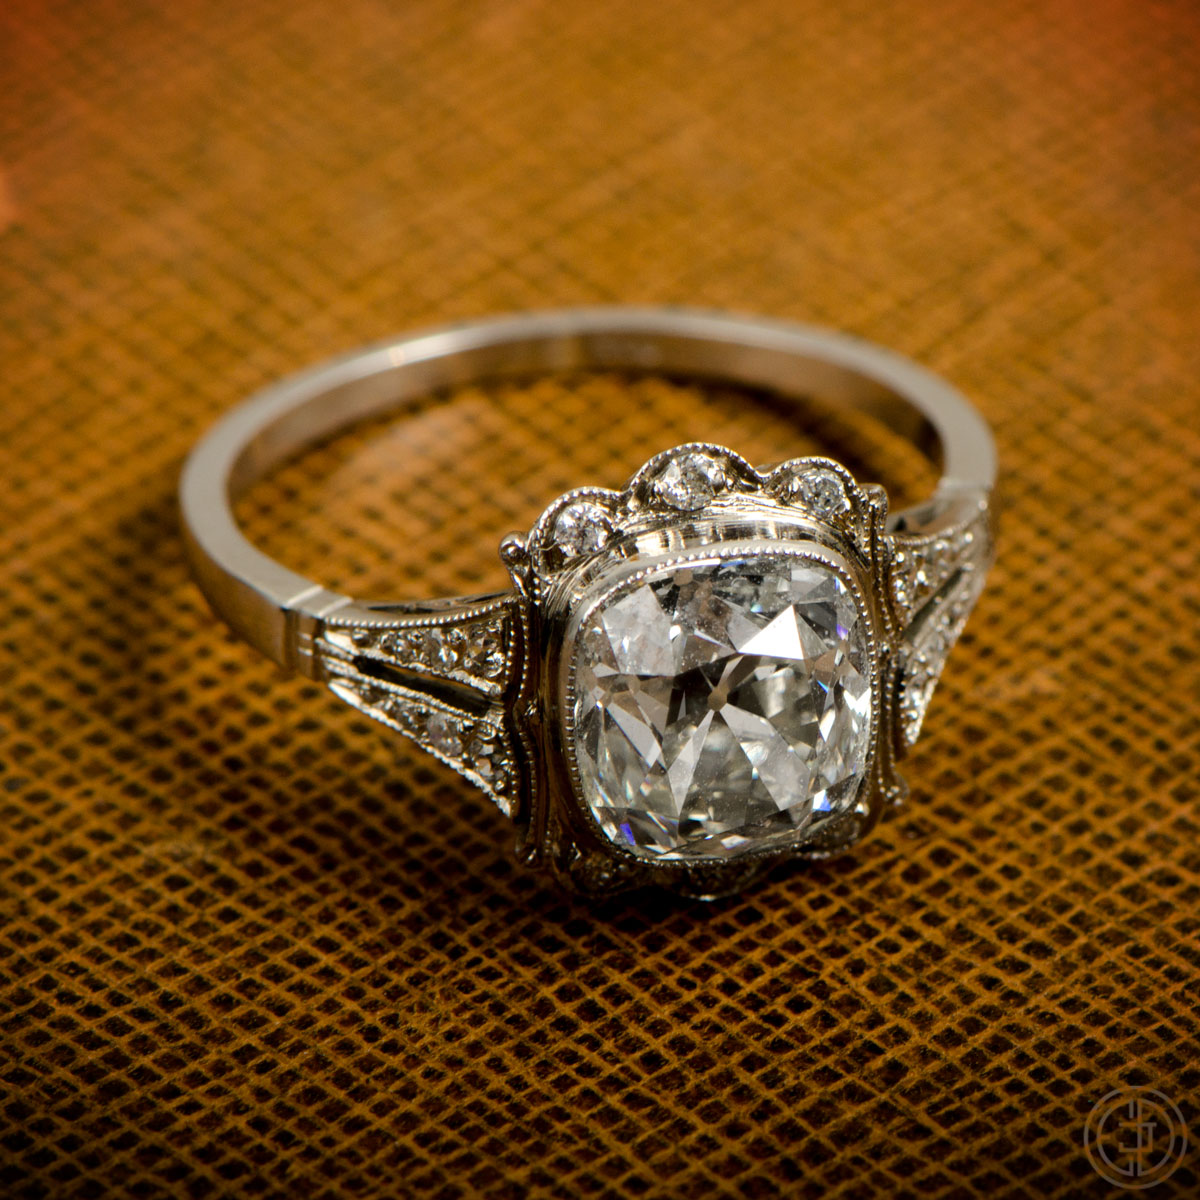 Cushion Cut Diamond Engagement Ring from Estate Diamond Jewelry